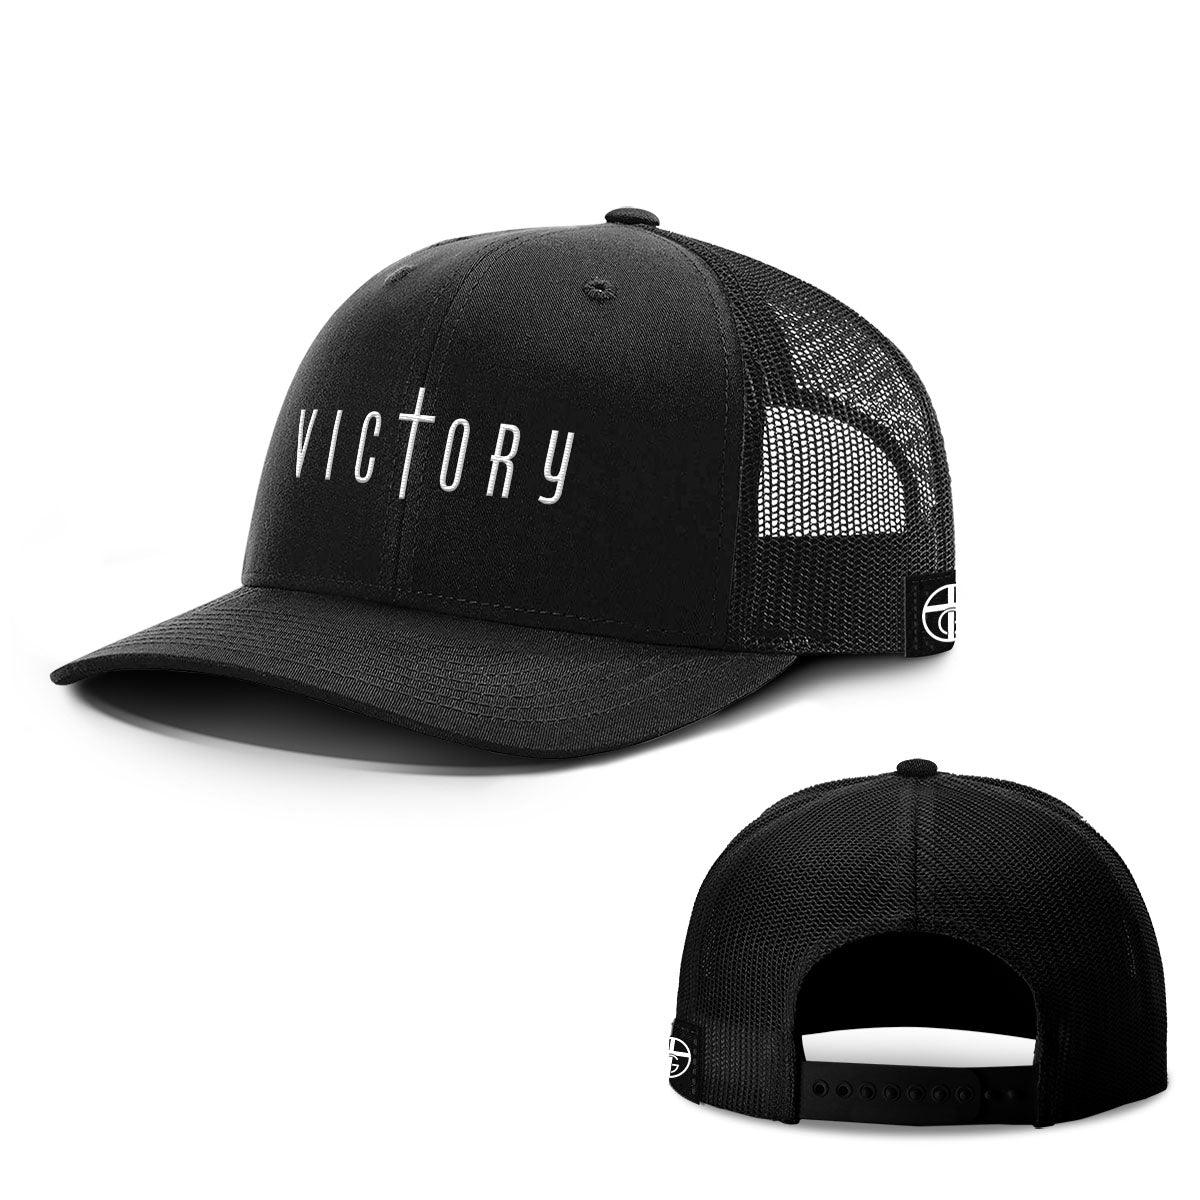 Victory Hats